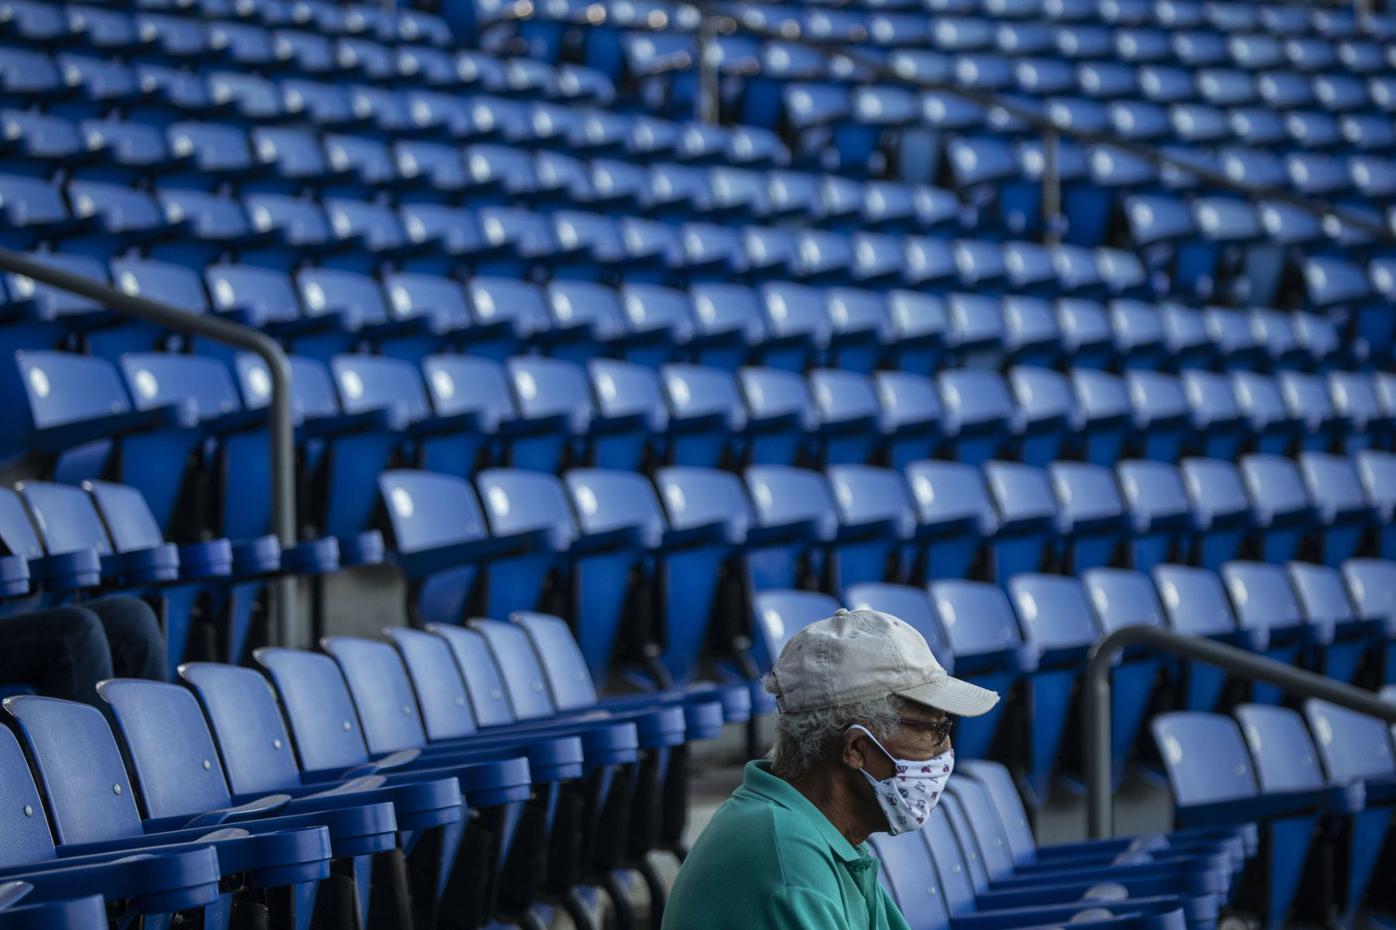 U.S. gets glimpse of pandemic pro baseball in Korea: Empty